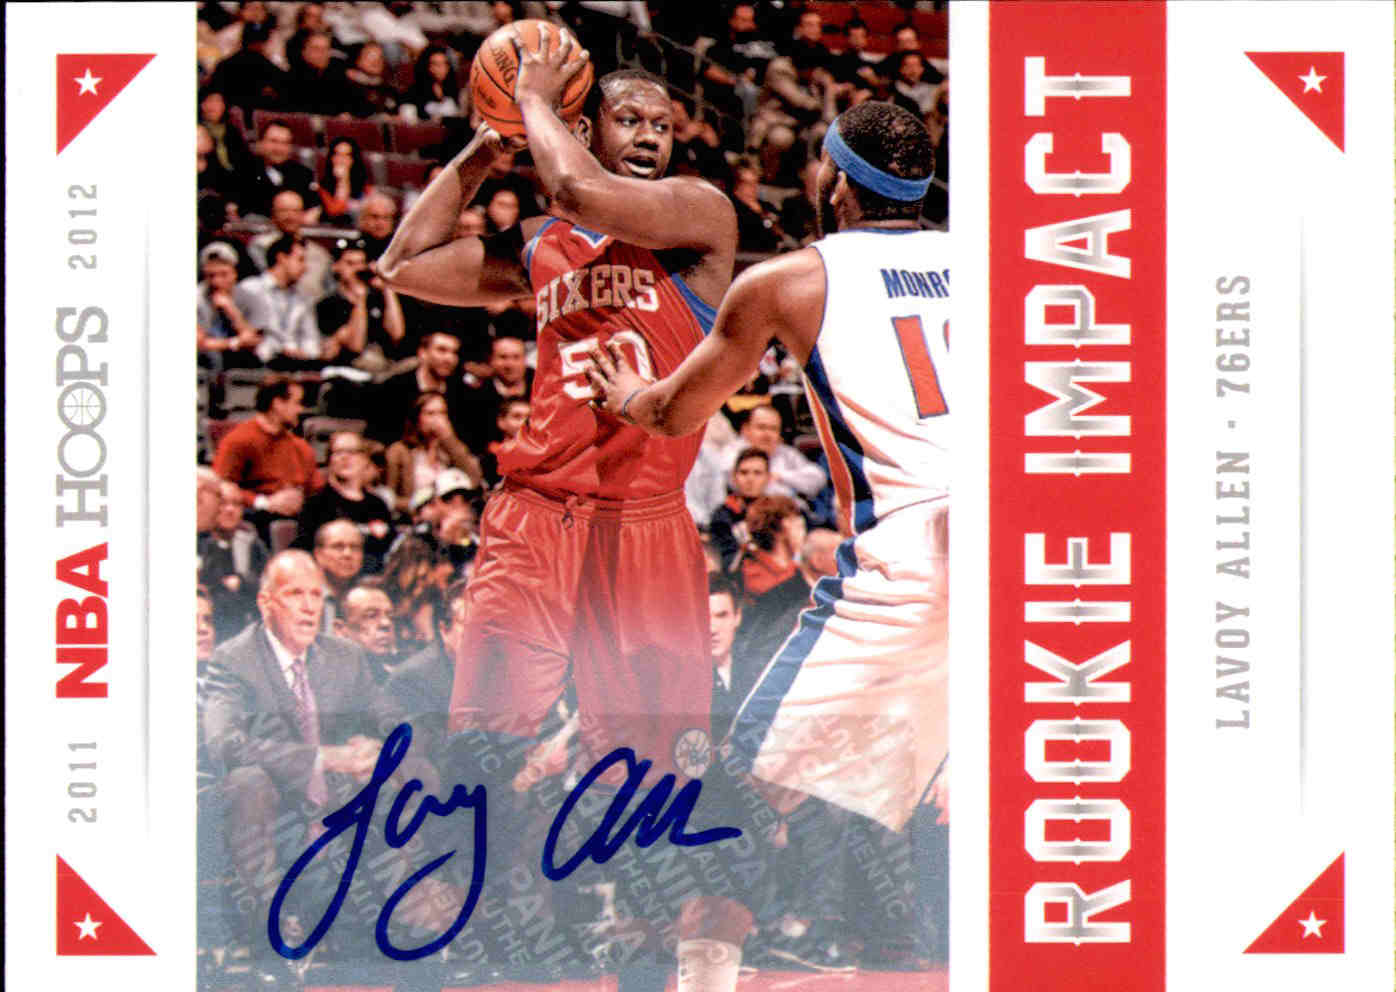 2012-13 Hoops Rookie Impact Autographs #28 Lavoy Allen Auto RC Card. rookie card picture